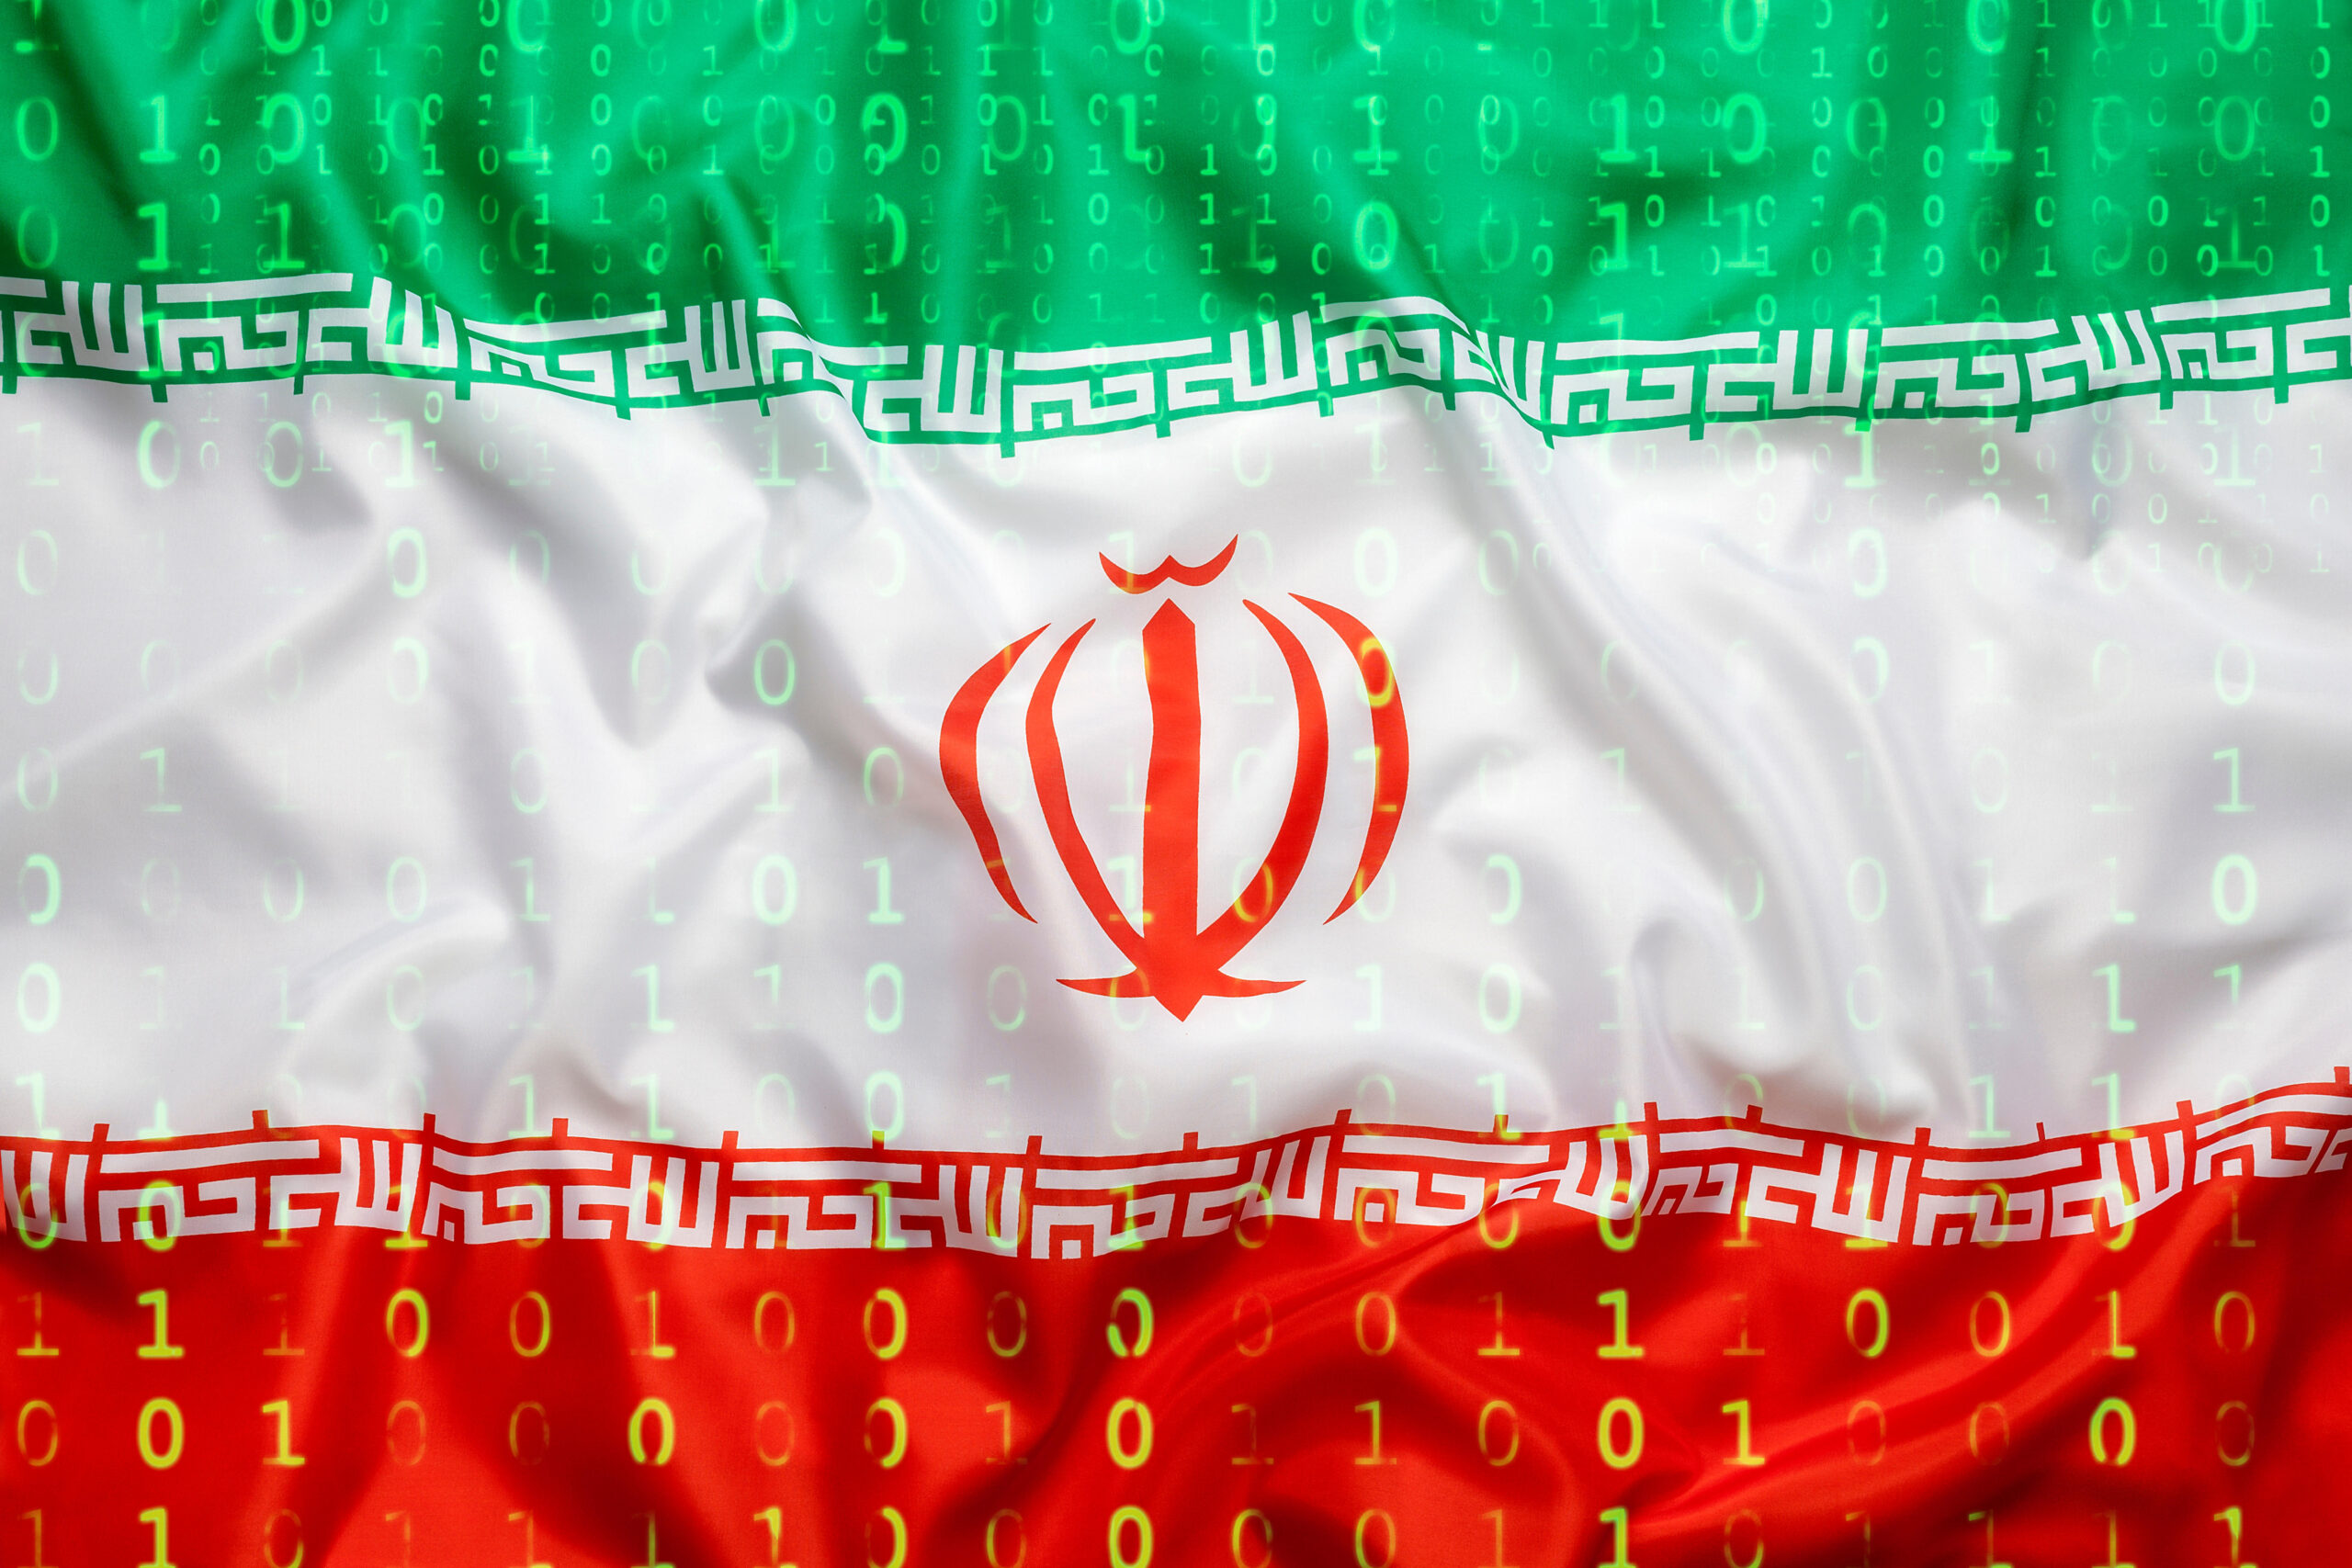 GhostSec Leaks Source Code of Alleged Iranian Surveillance Tool – Source: www.darkreading.com